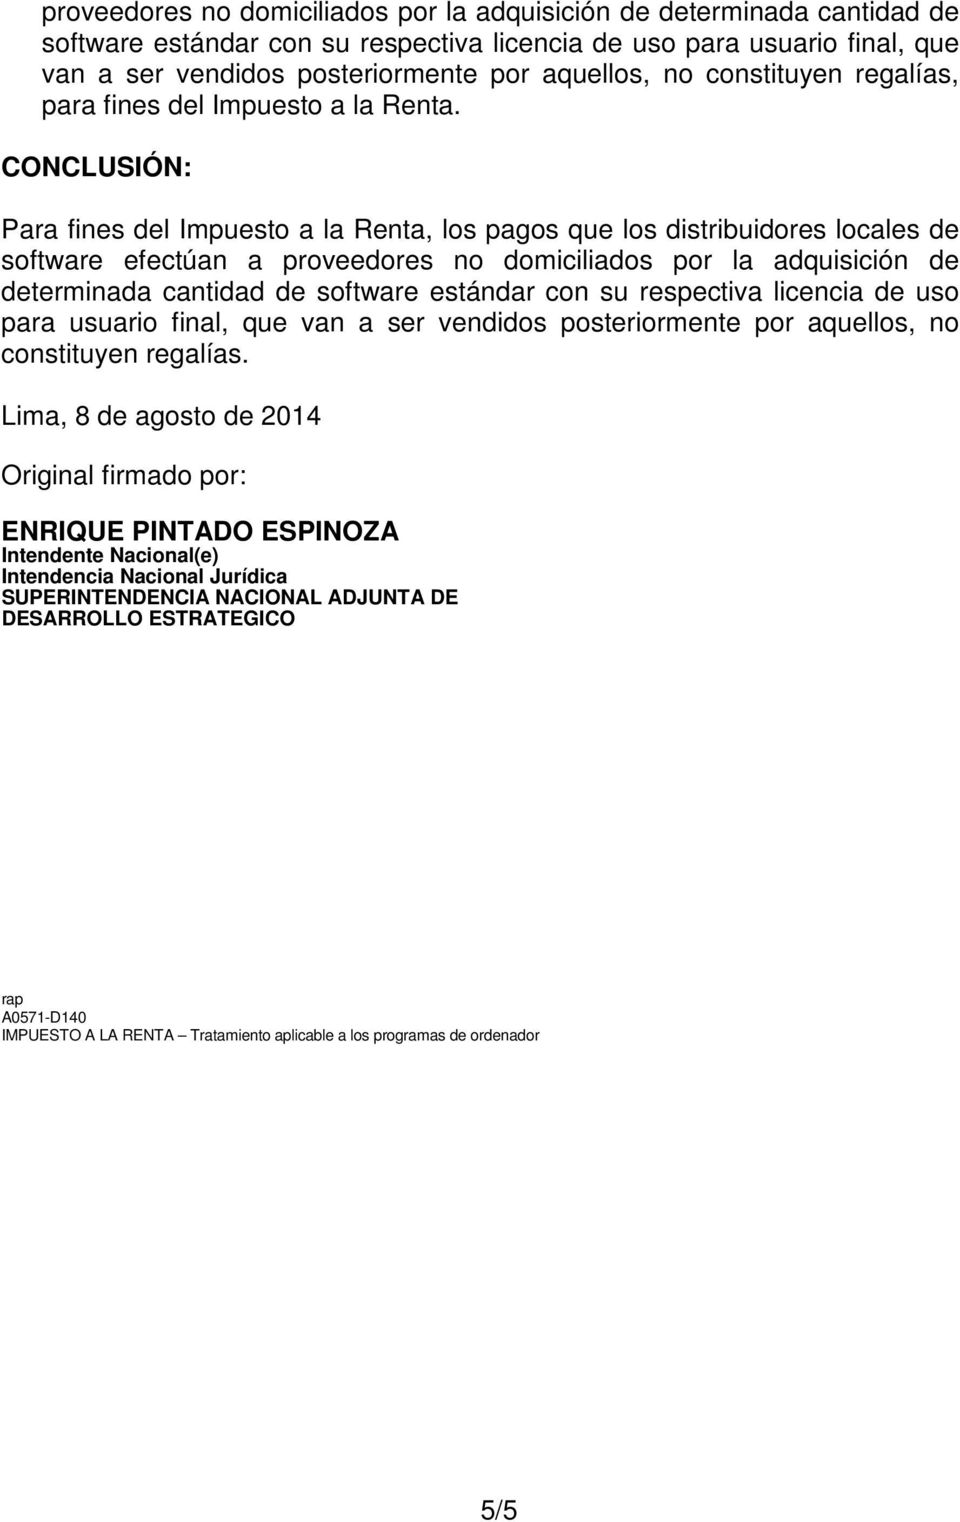 Lima, 8 de agosto de 2014 Original firmado por: ENRIQUE PINTADO ESPINOZA Intendente Nacional(e) Intendencia Nacional Jurídica SUPERINTENDENCIA NACIONAL ADJUNTA DE DESARROLLO ESTRATEGICO rap